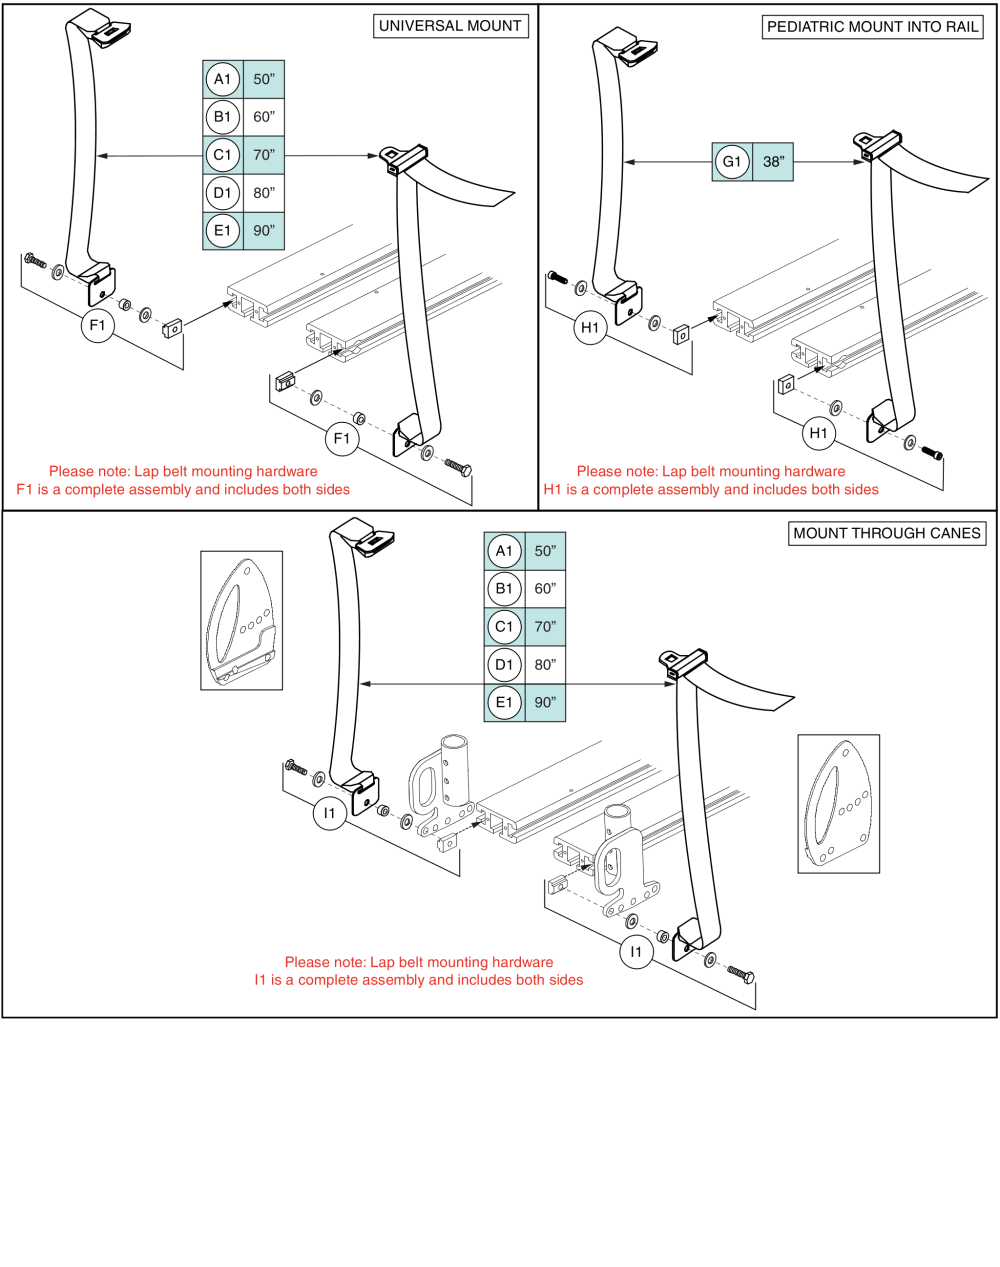 Lap Belts, Adult And Pediatric parts diagram